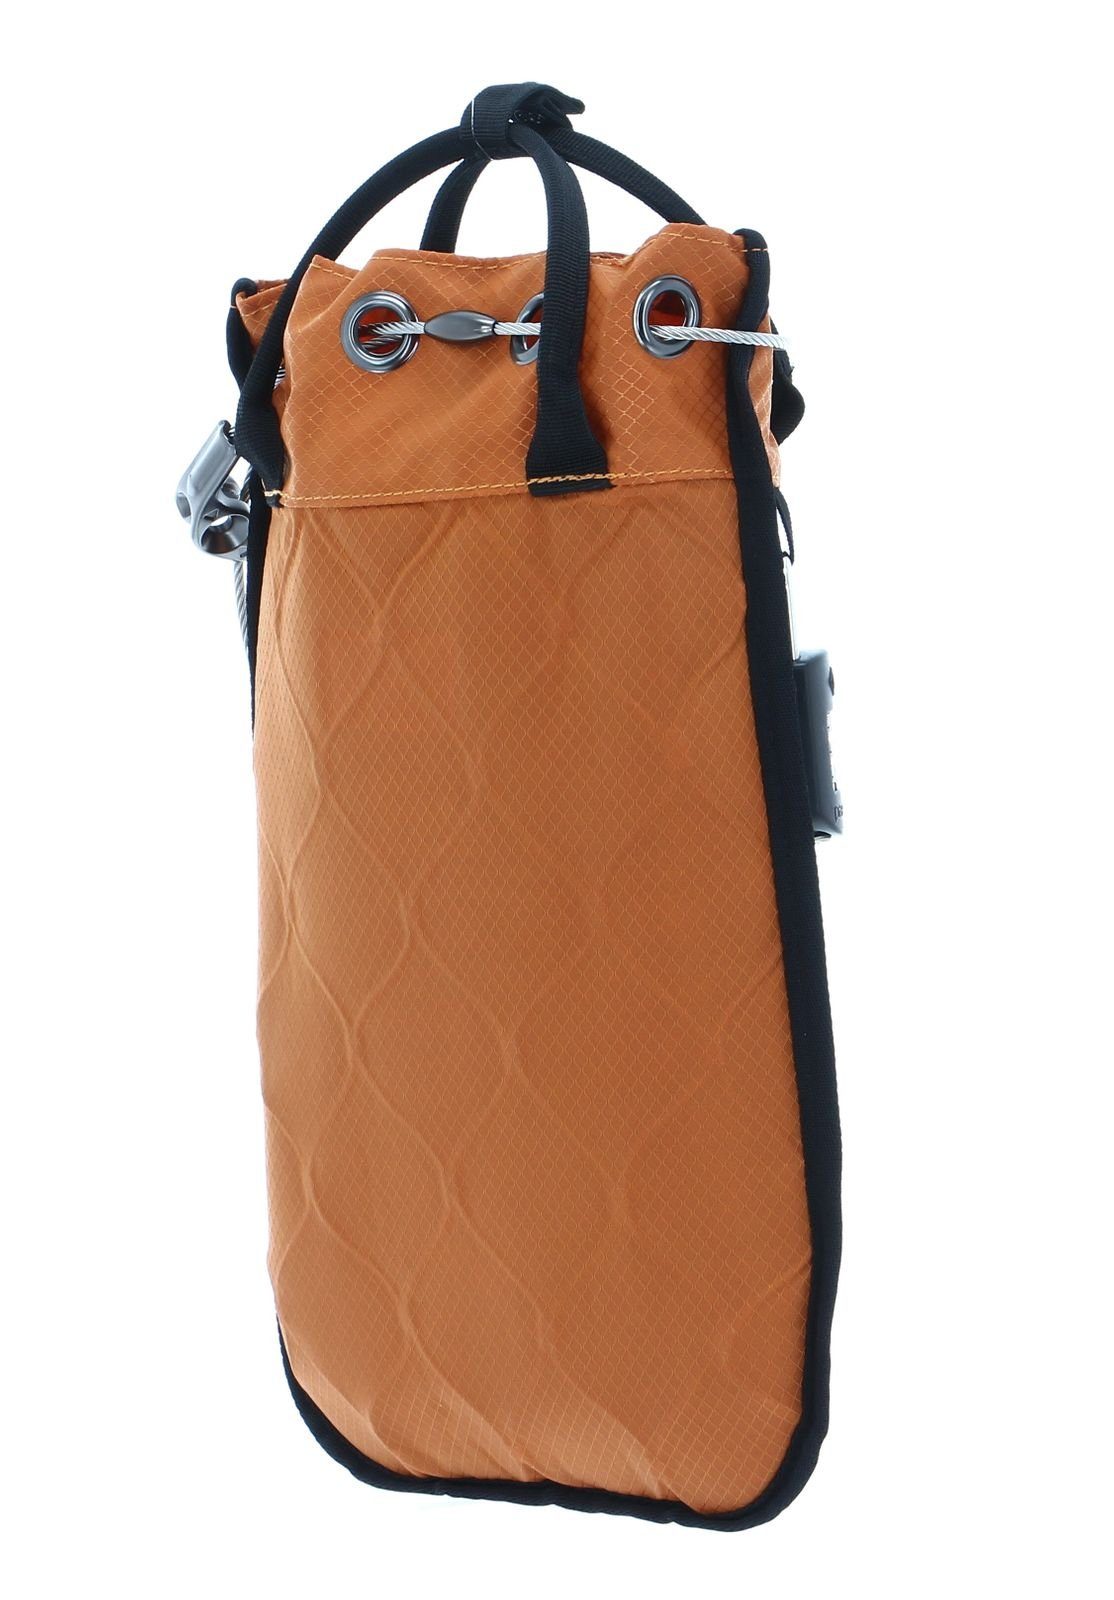 Pacsafe Travelsafe Orange Packsack